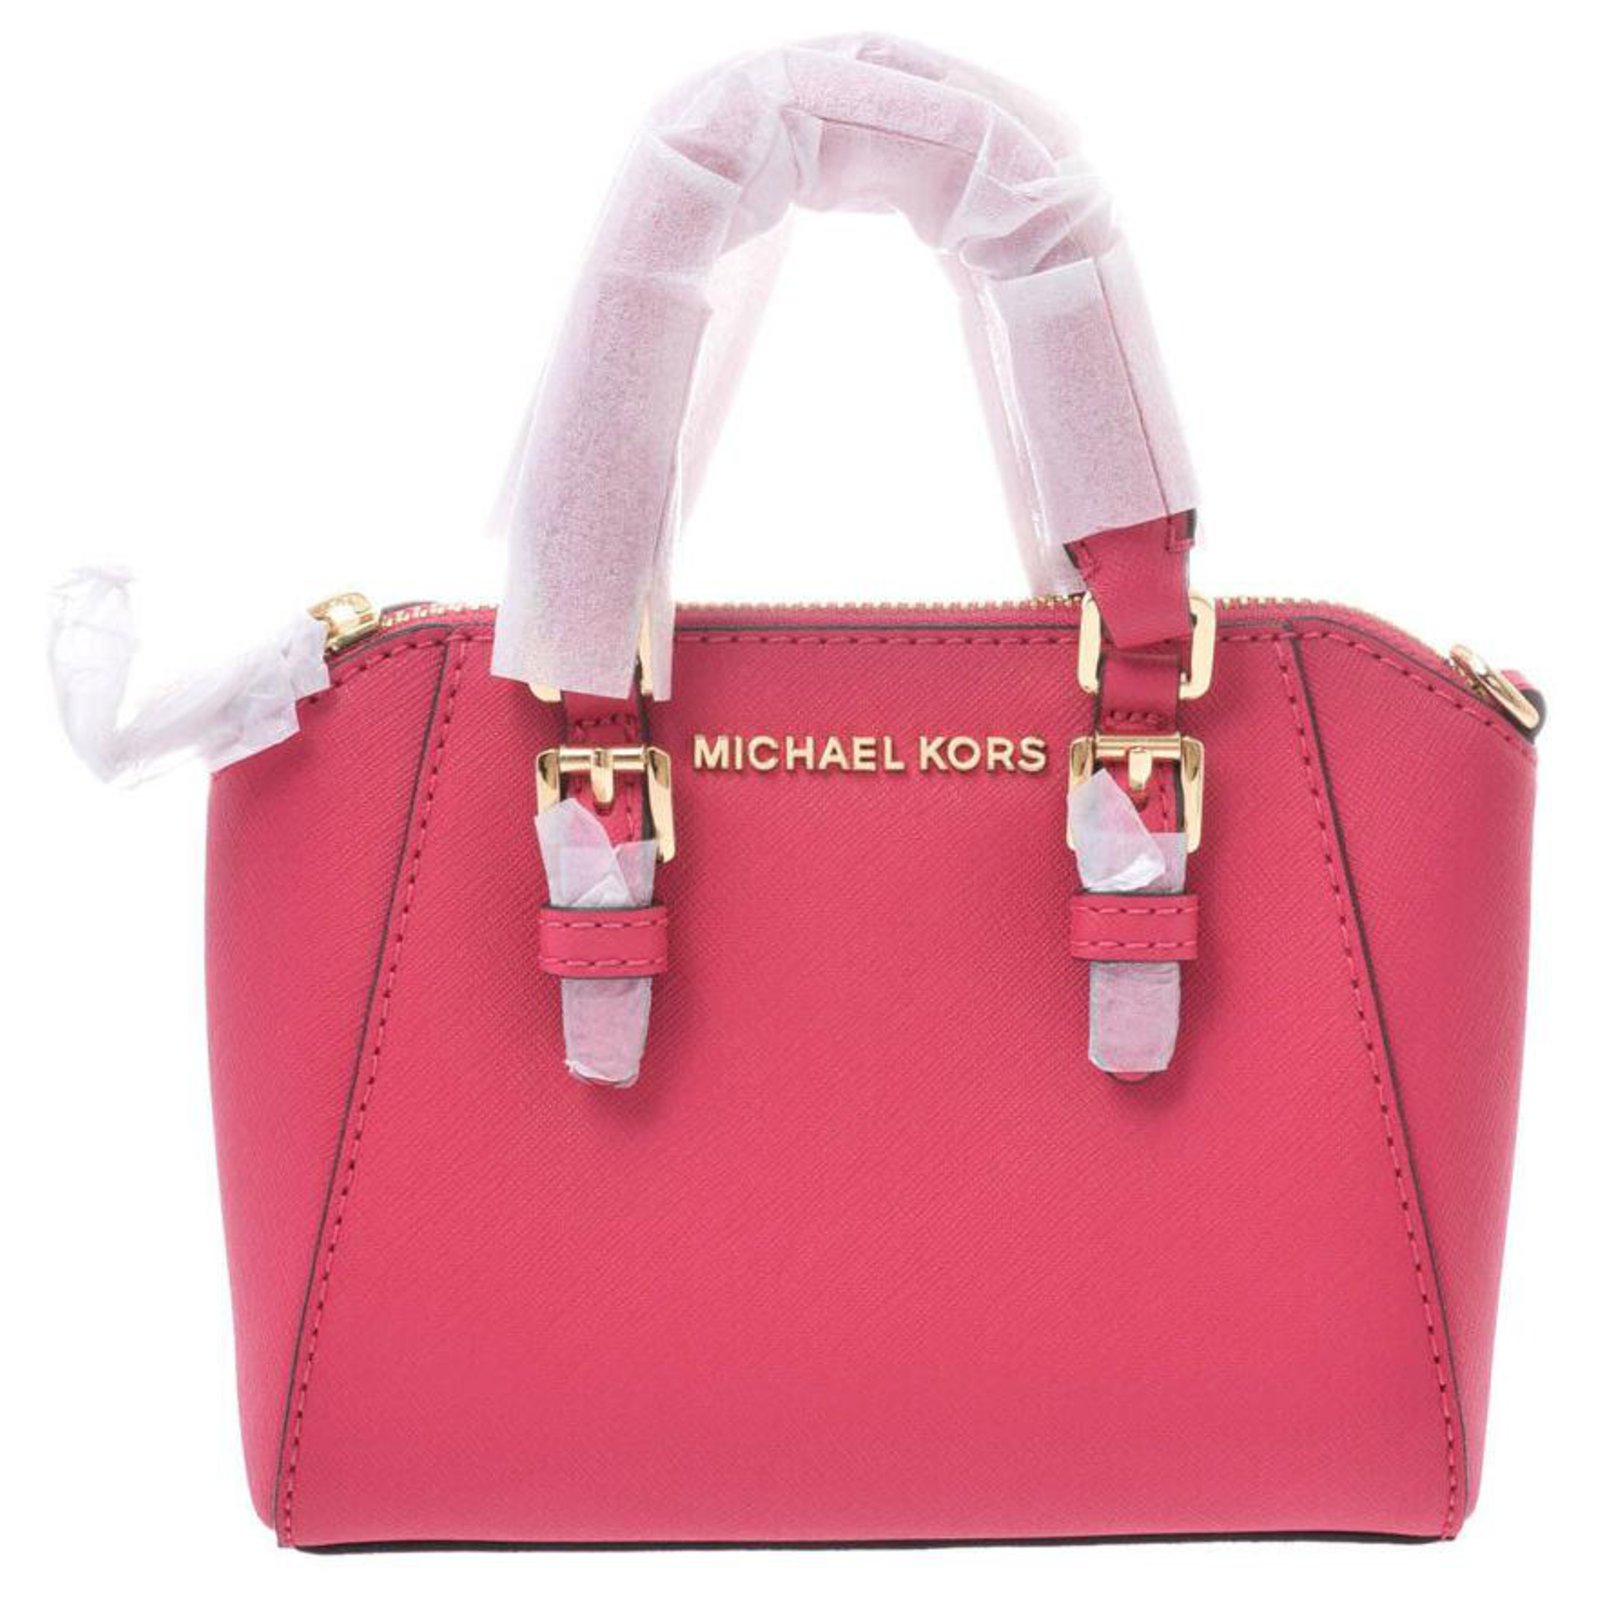 www michael kors com handbags